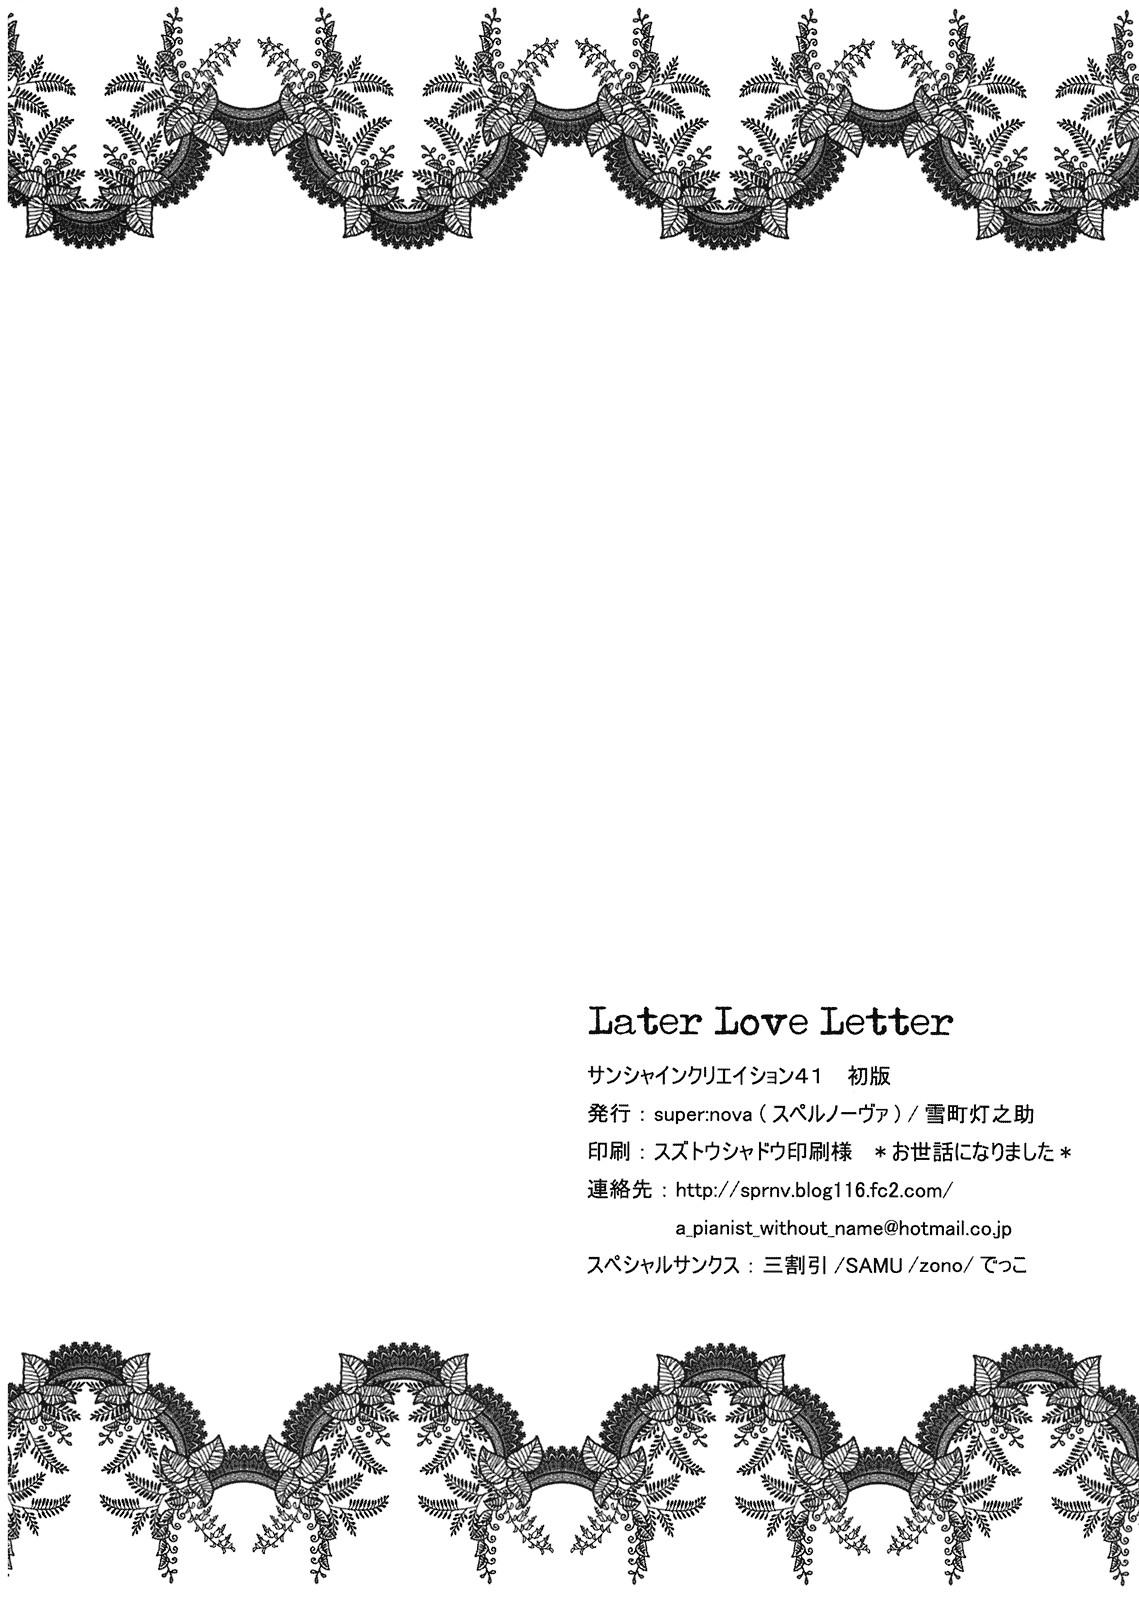 Later Love Letter 28